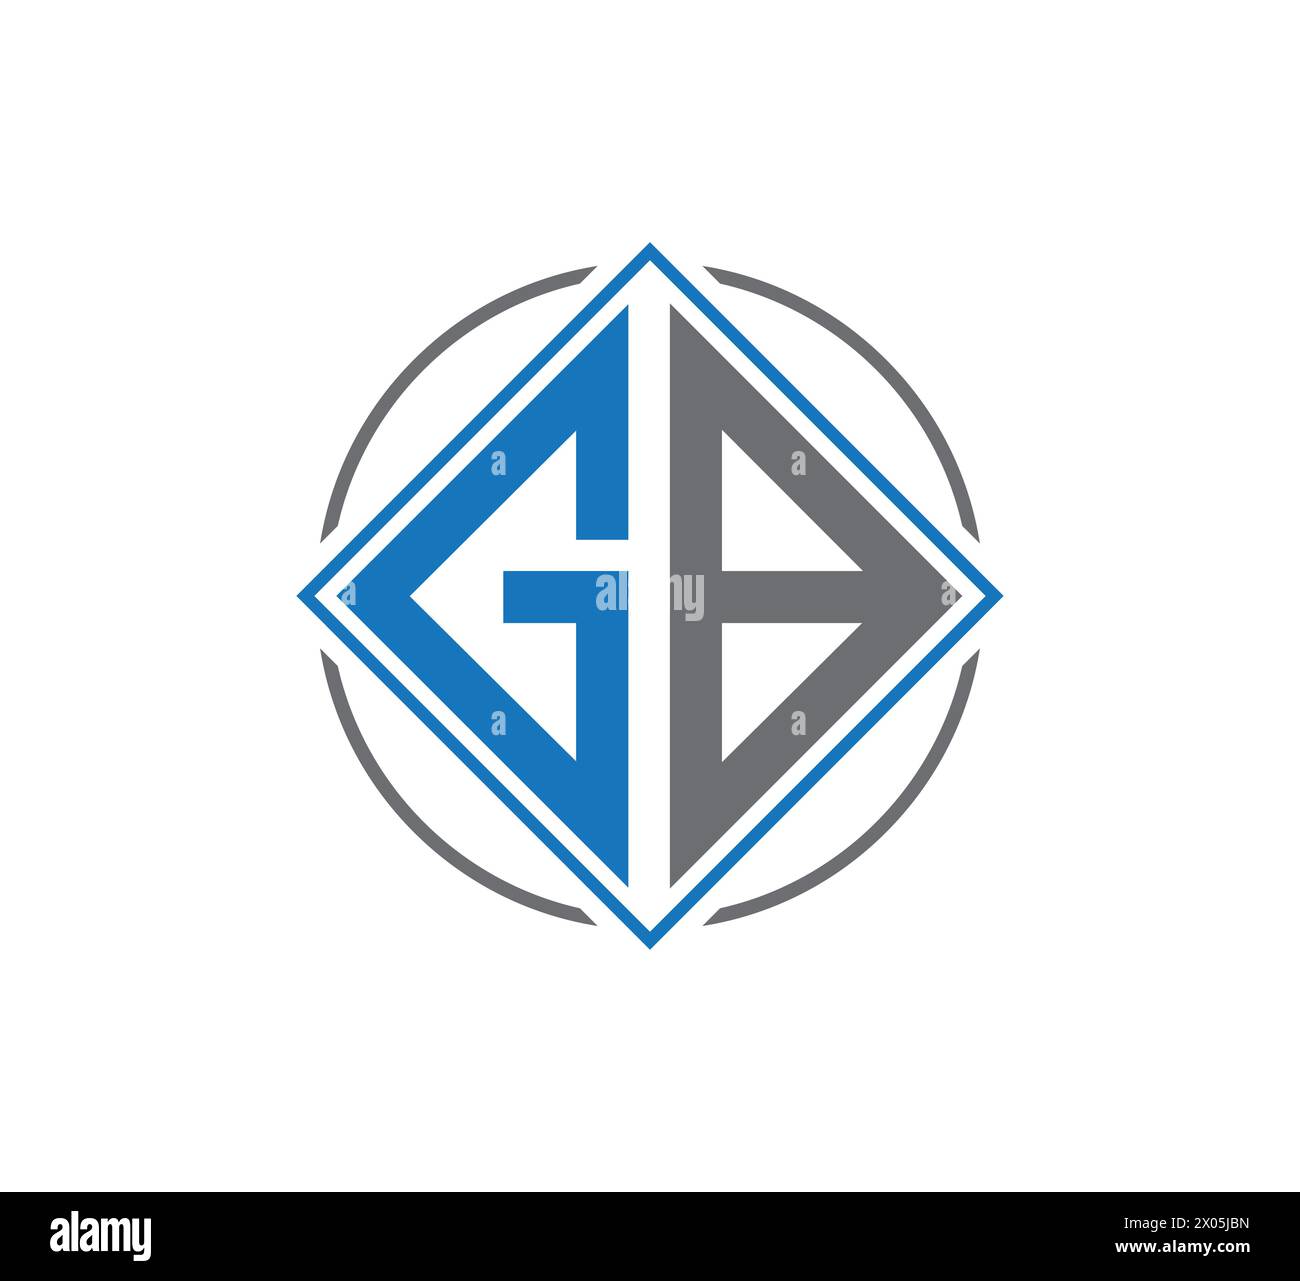 GB letter logo logo design vector template Stock Vector